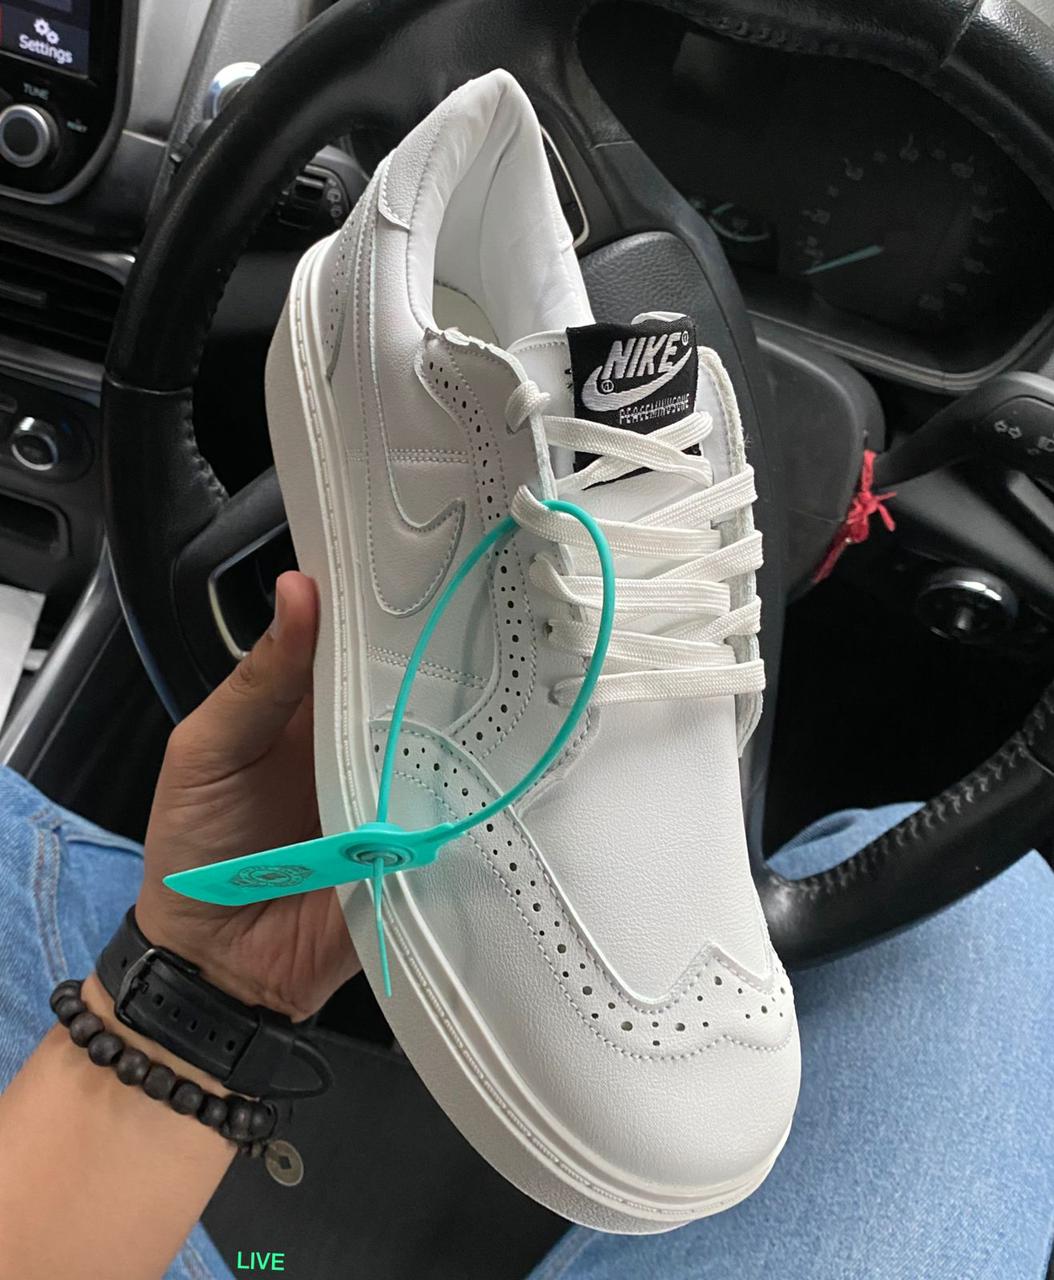 Kwondo 1 Full White Sneakers In Stock